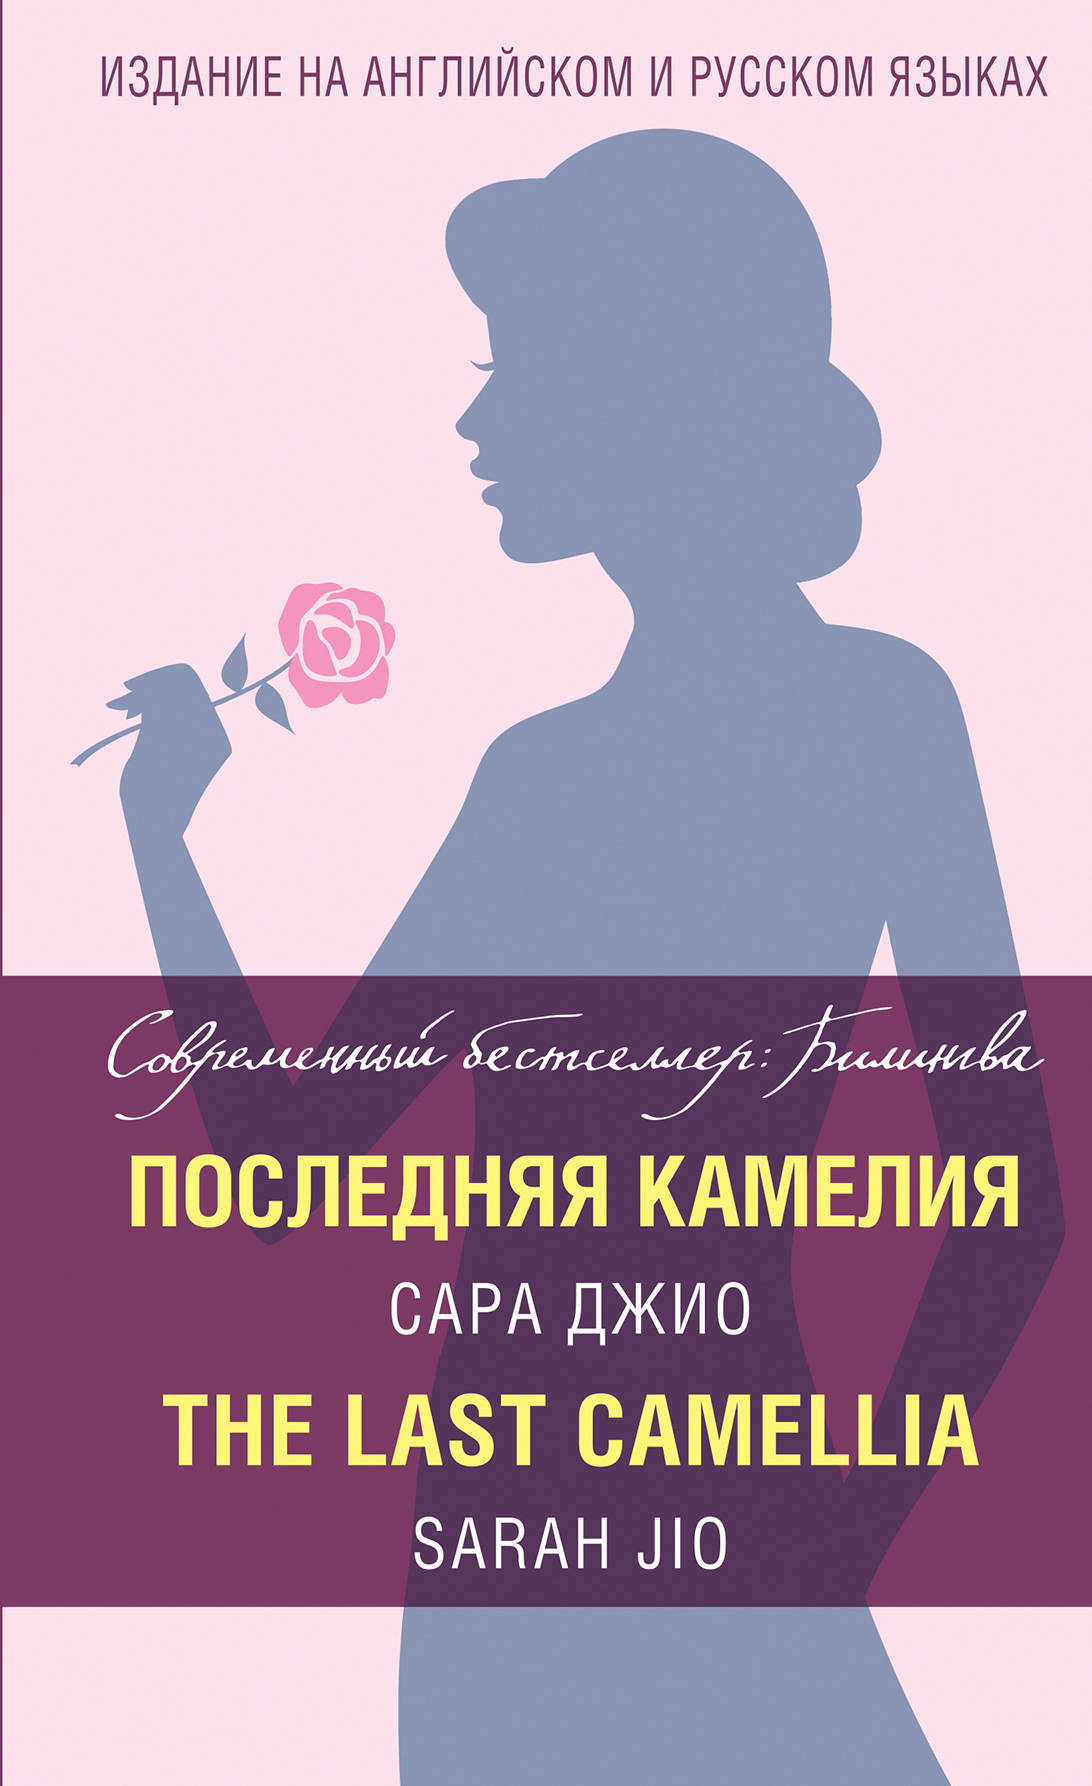  . The Last Camellia